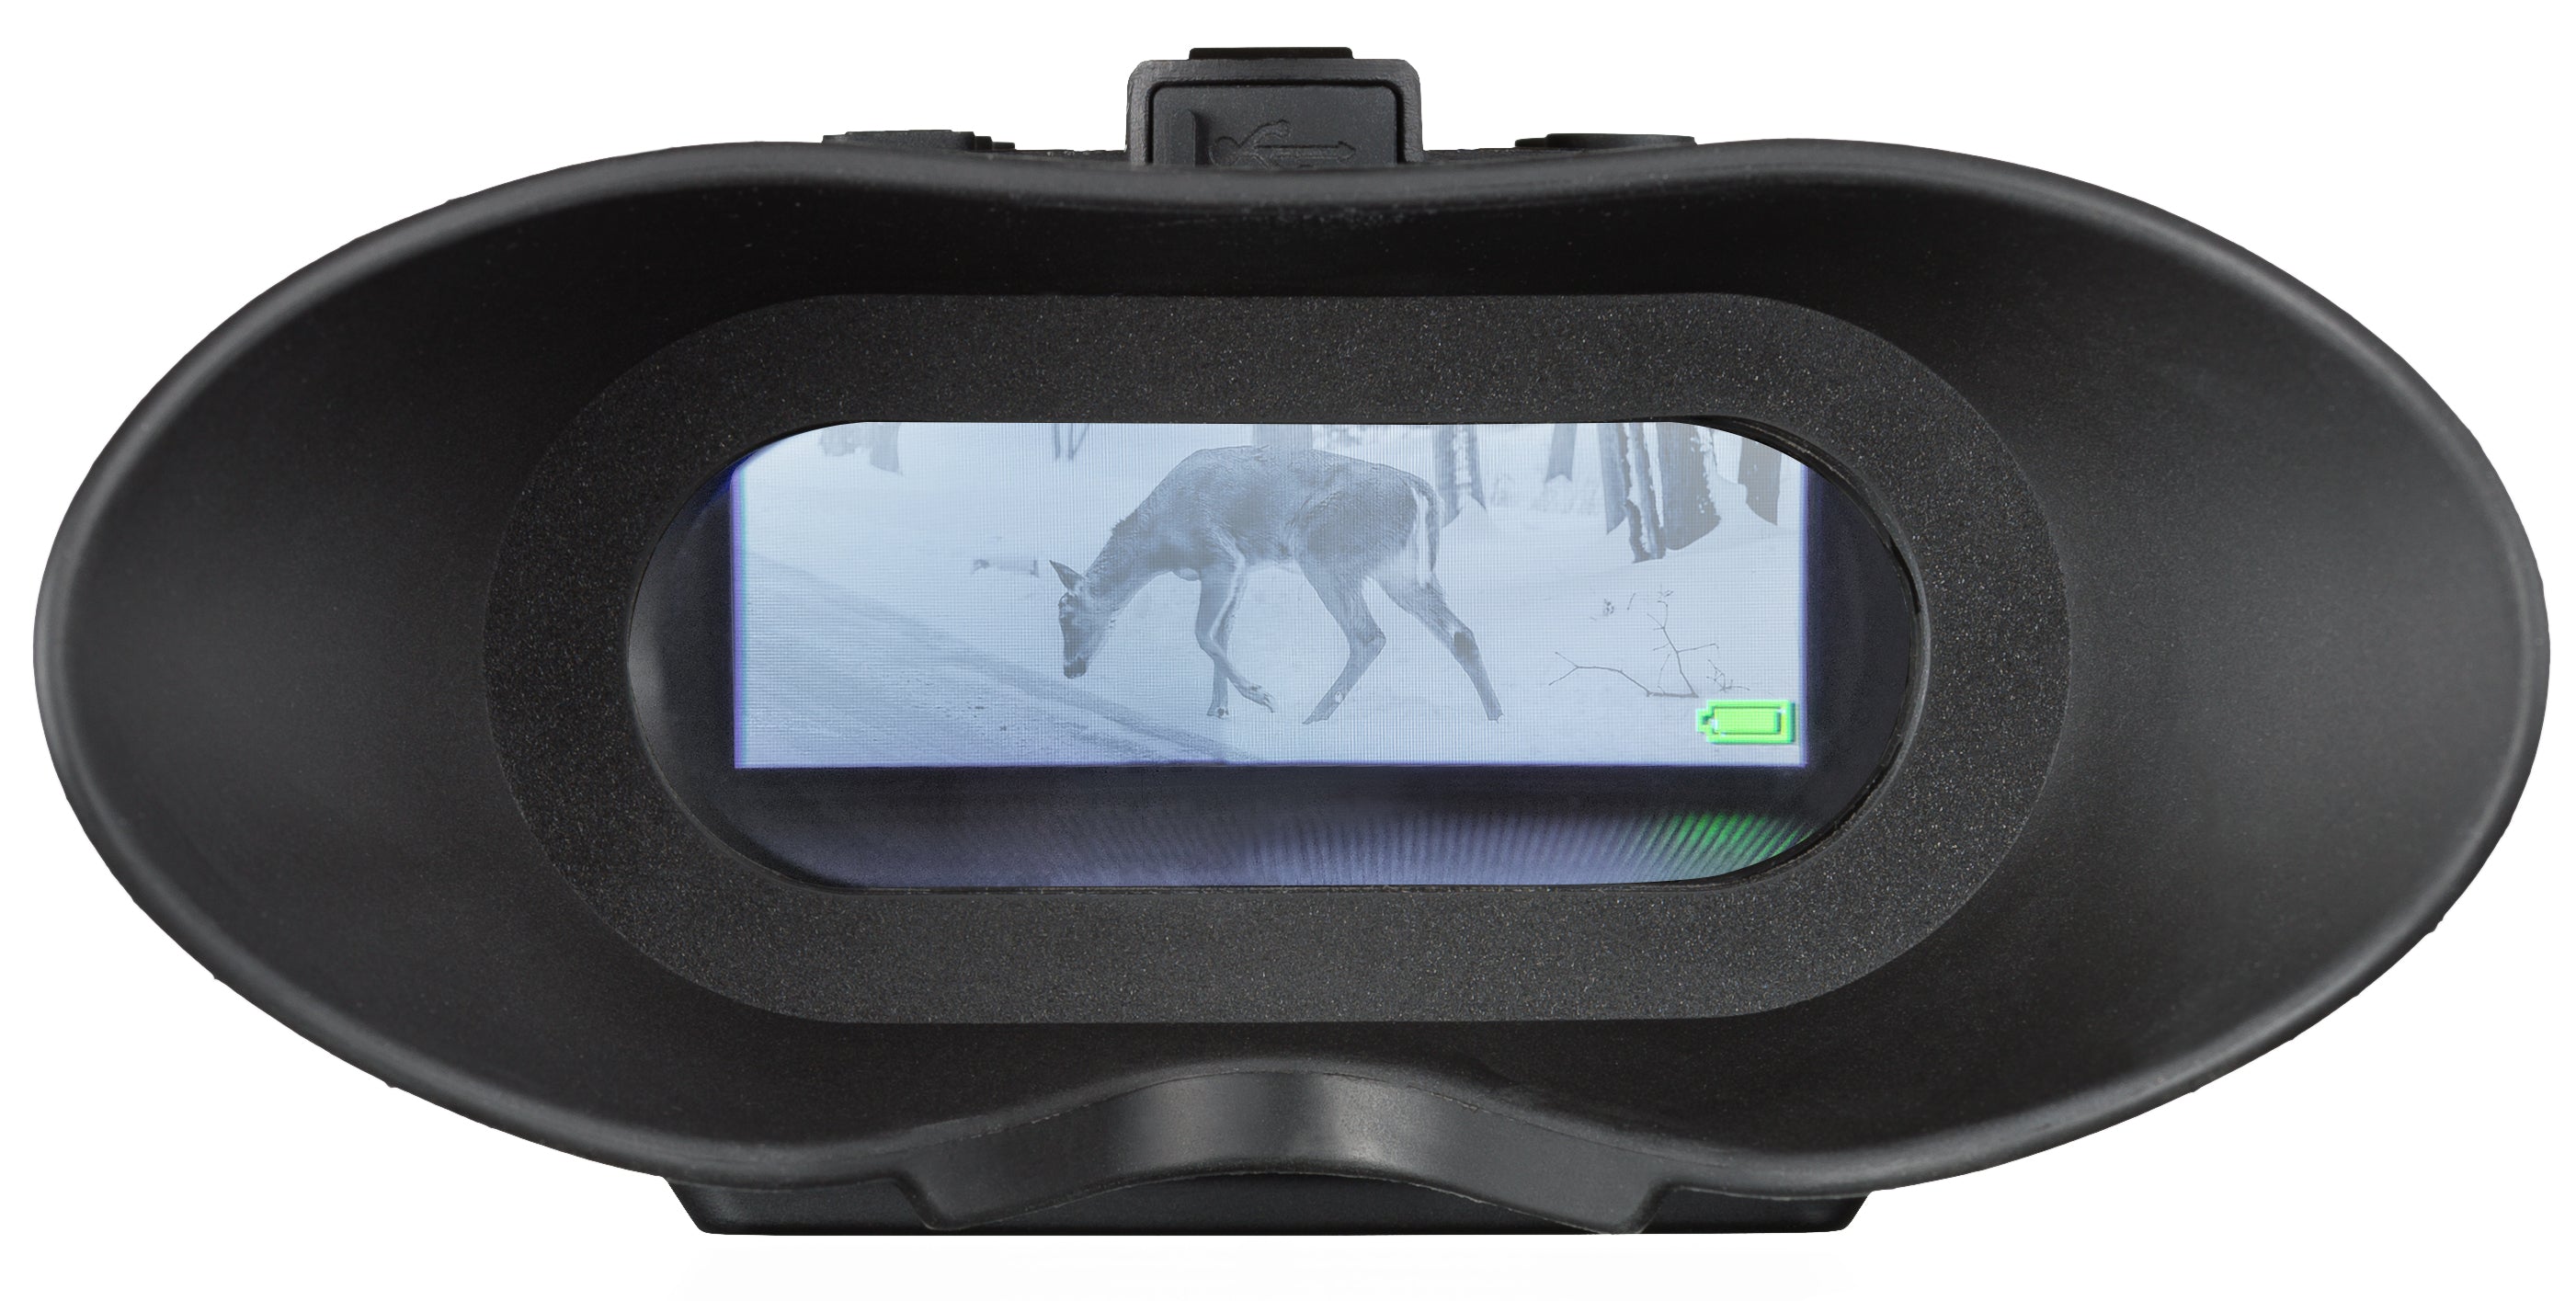 Bresser Digital Nightvision Binocular 1x W.Head Mount